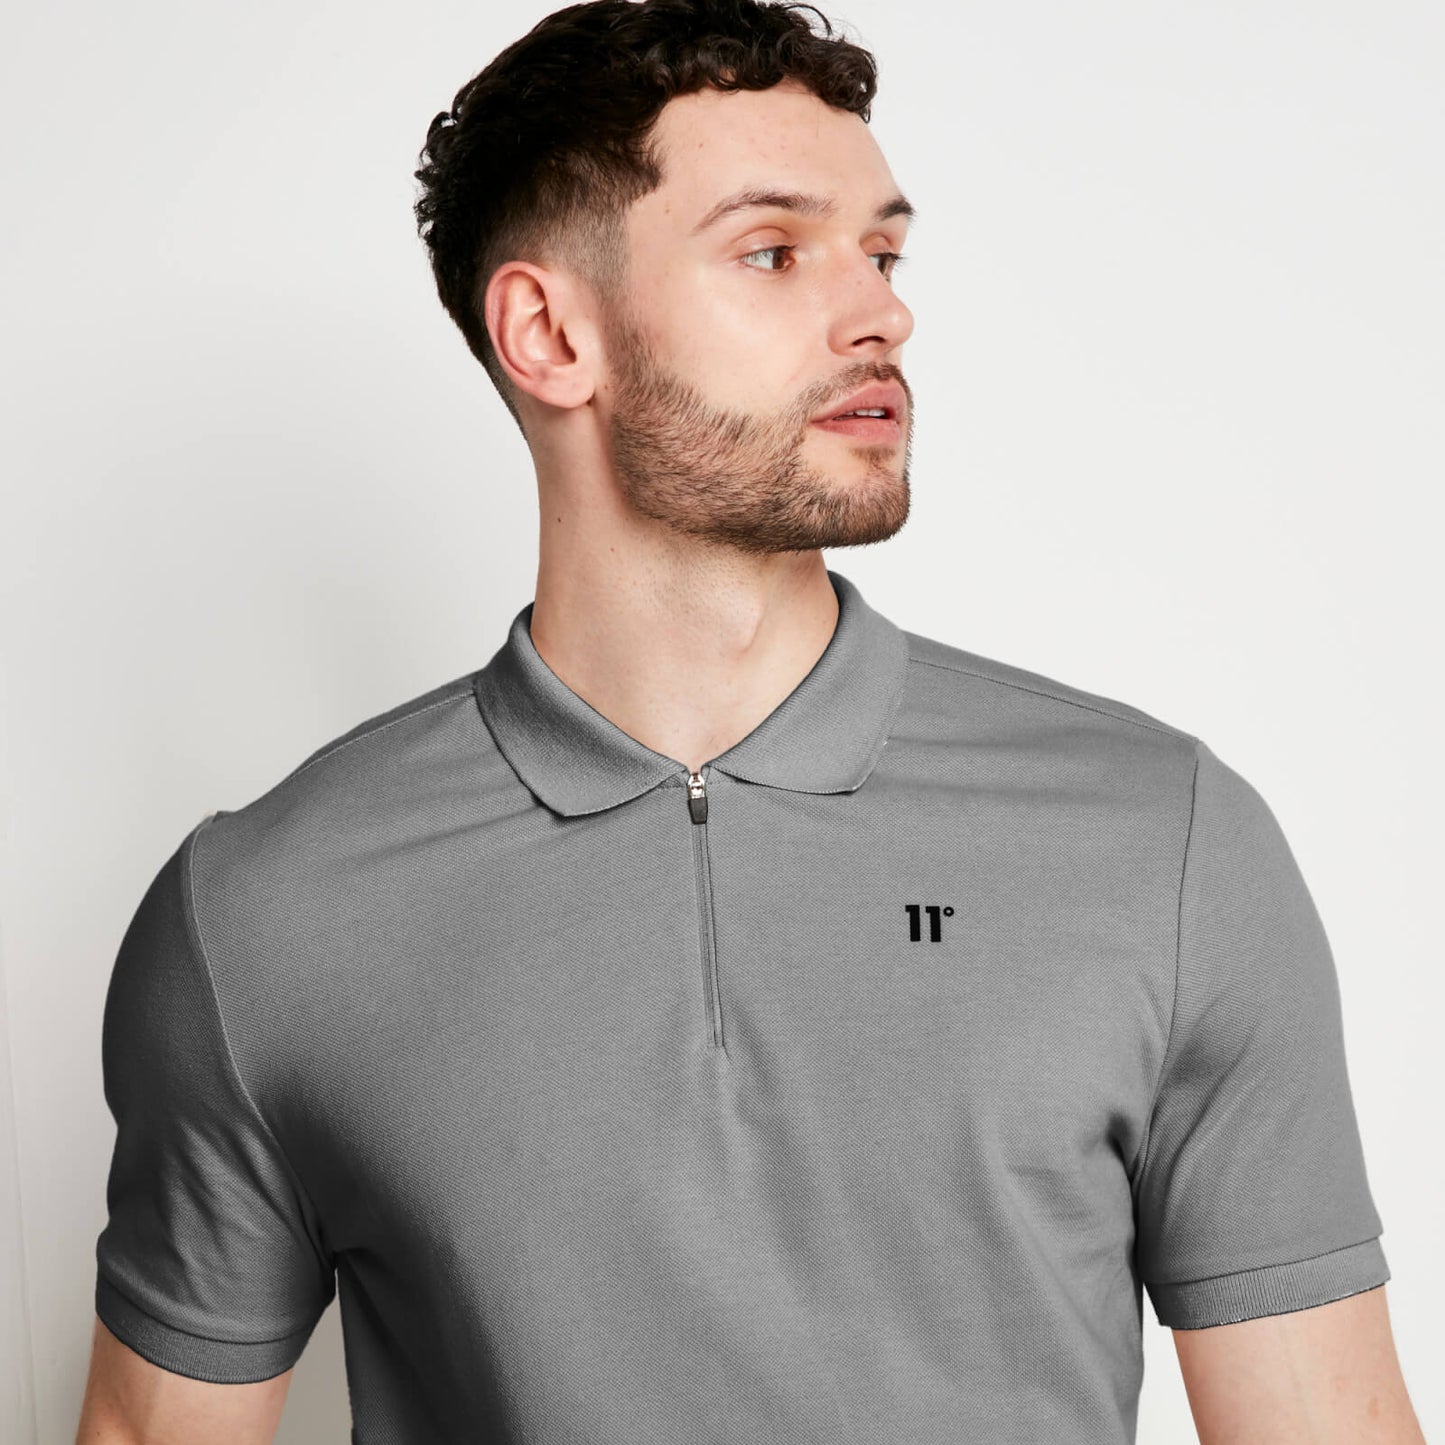 11 Degrees SMART zip polo shirt - Charcoal